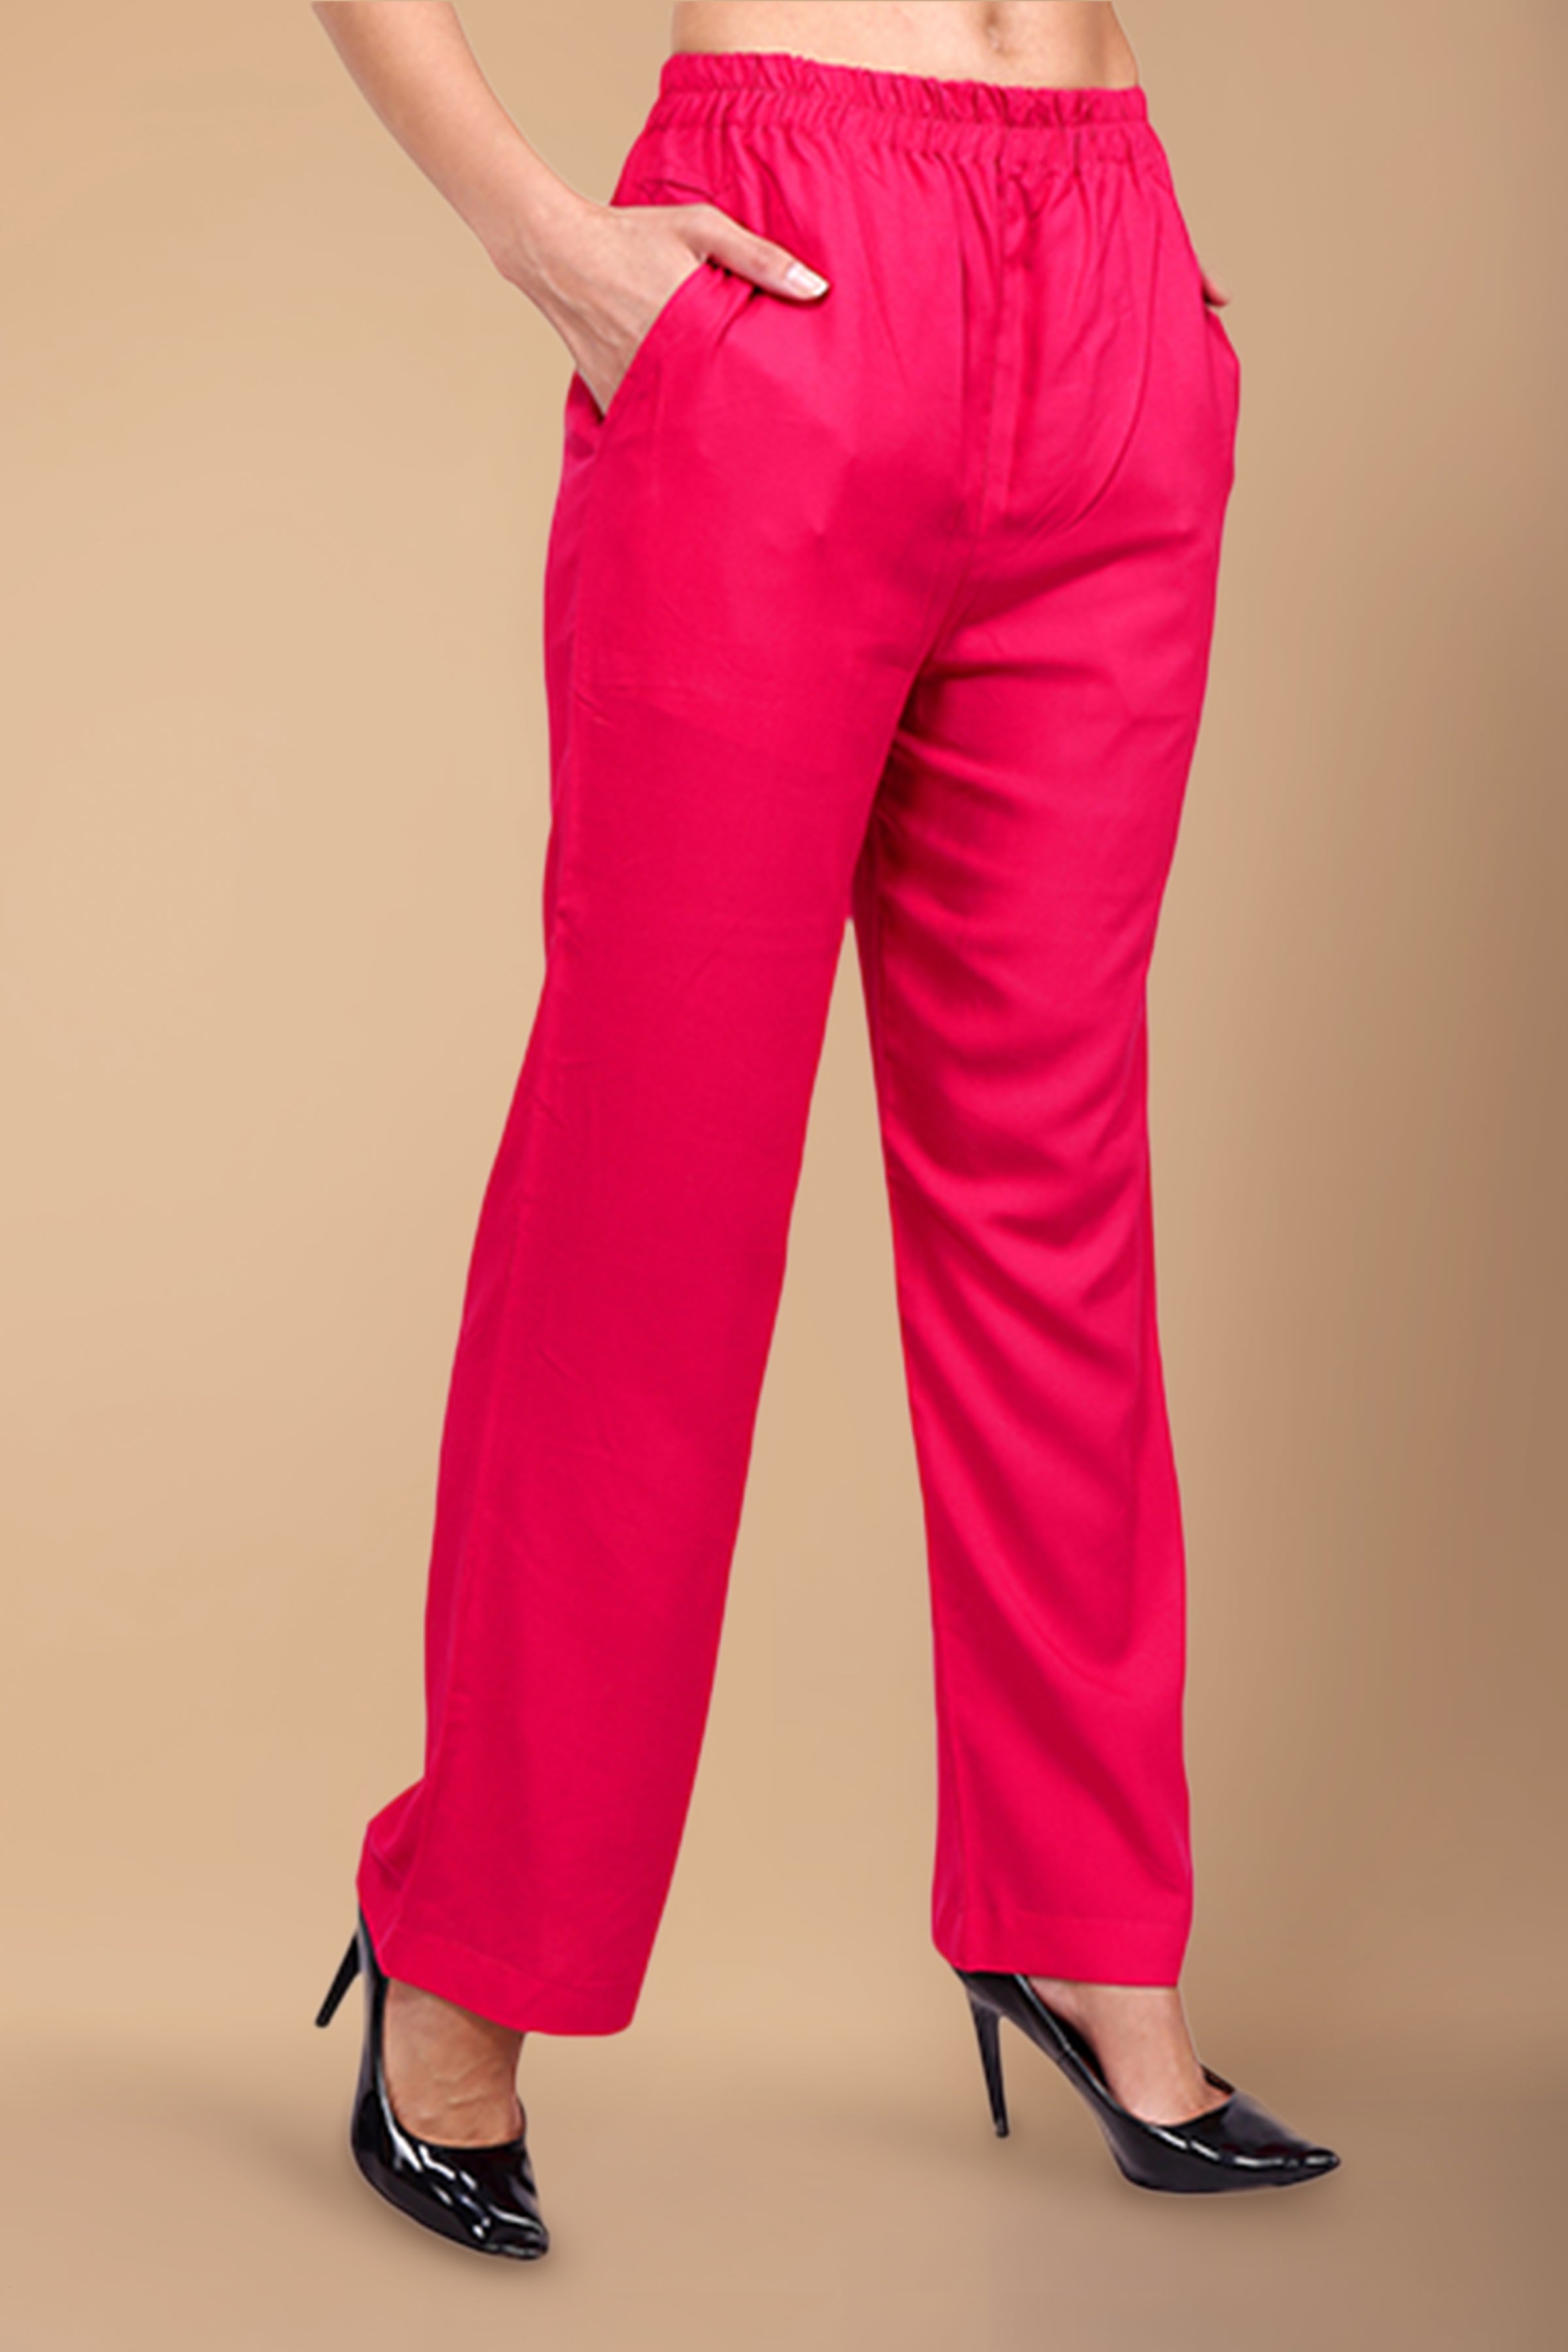 Buy Koolkidzstore Girls Pants Palazzo Pants Chiffon Style 2-8Y - 6 Sizes (4  Colors) | eRomman